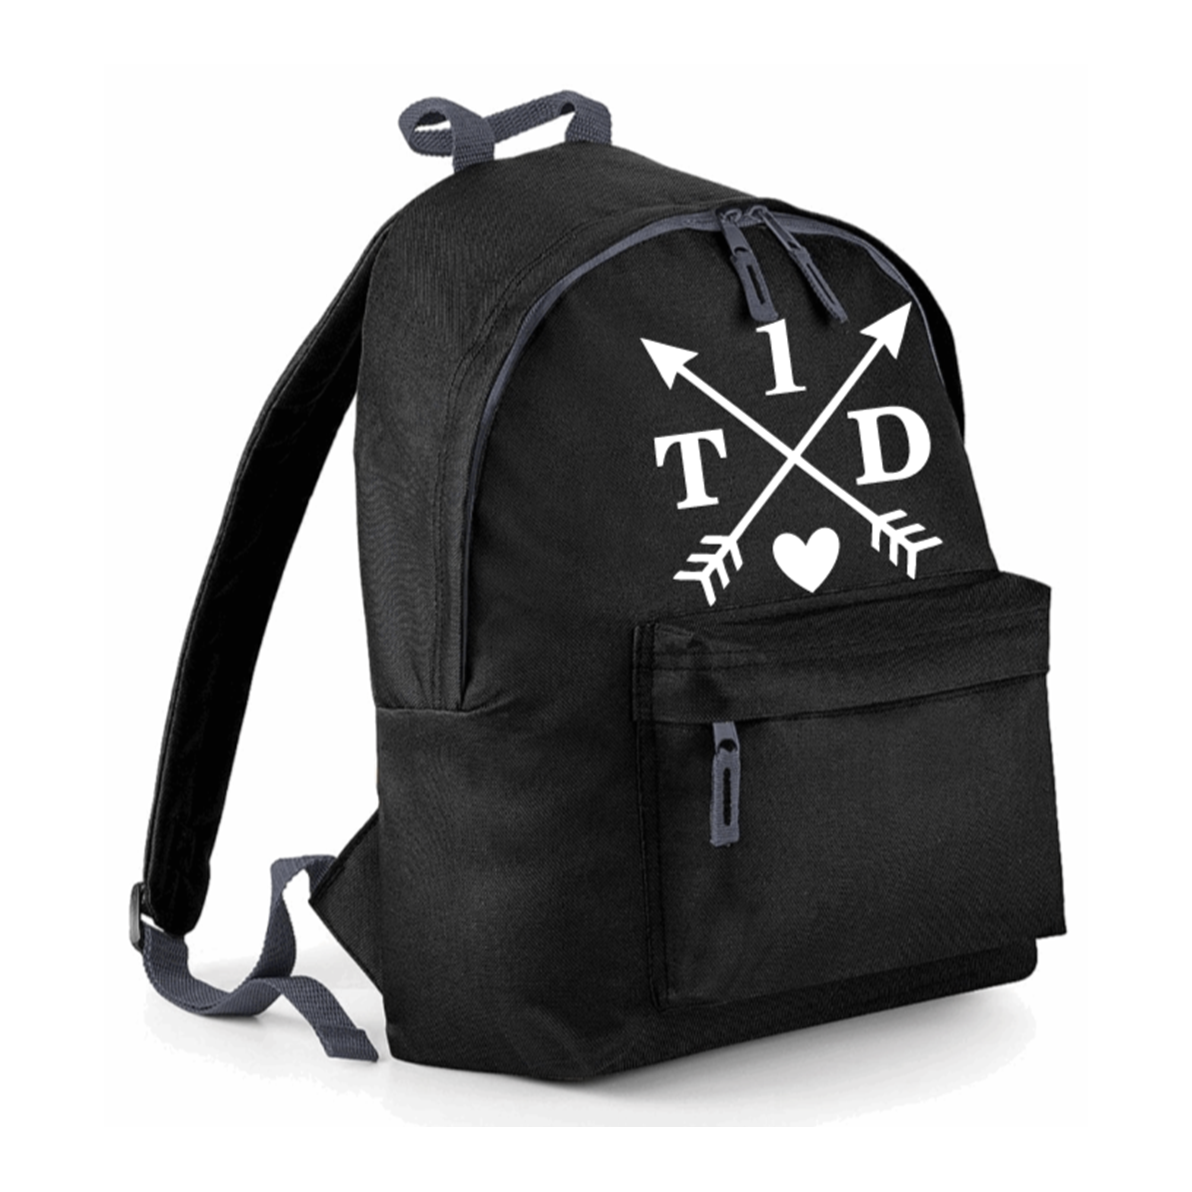 T1D Backpack